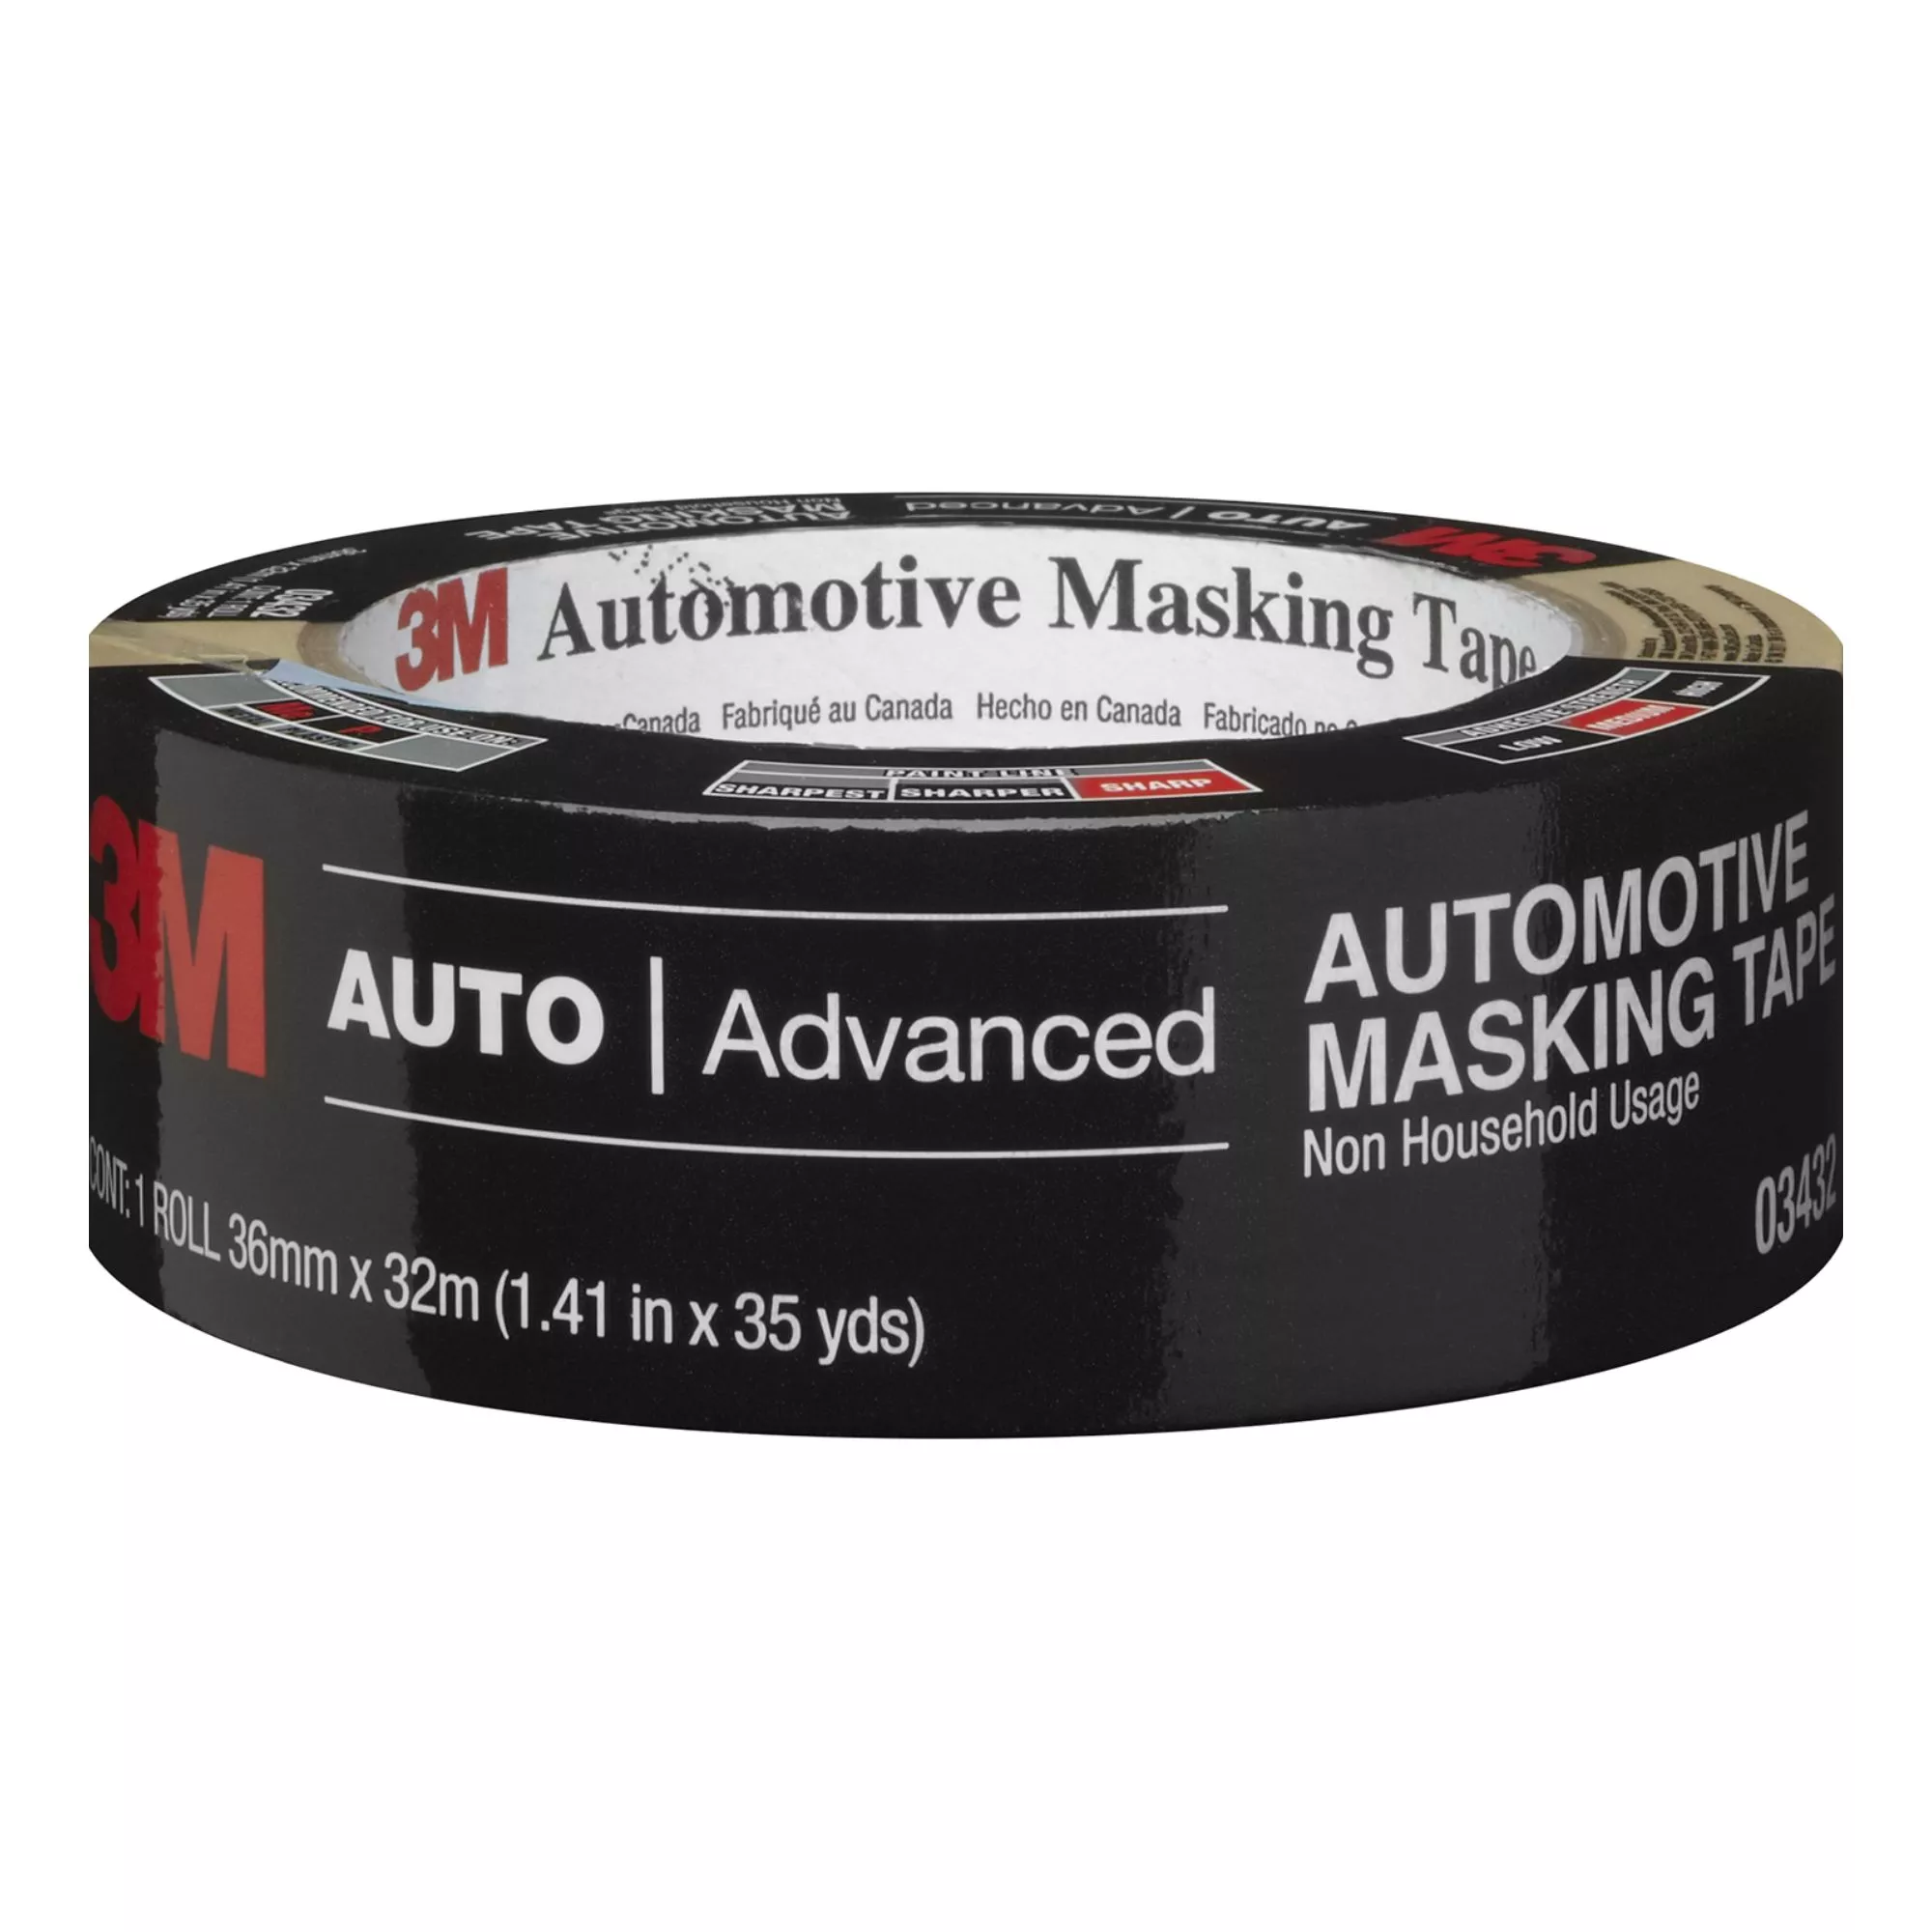 SKU 7100255773 | 3M™ Automotive Masking Tape 03432ESF